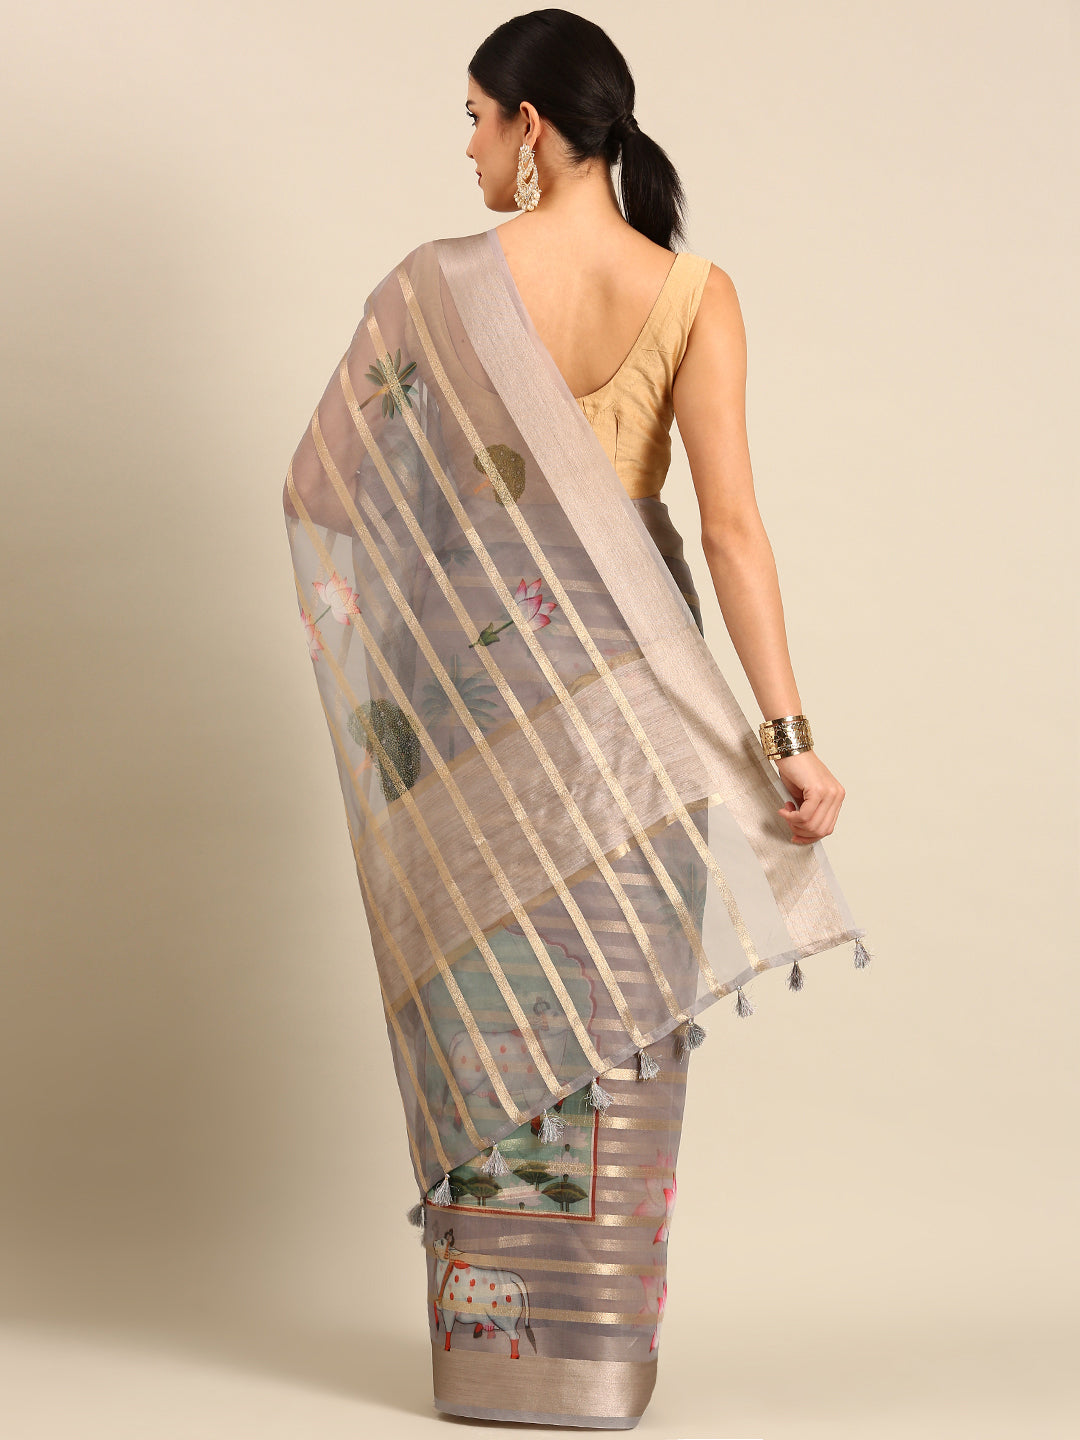 Designer Grey Silk Saree